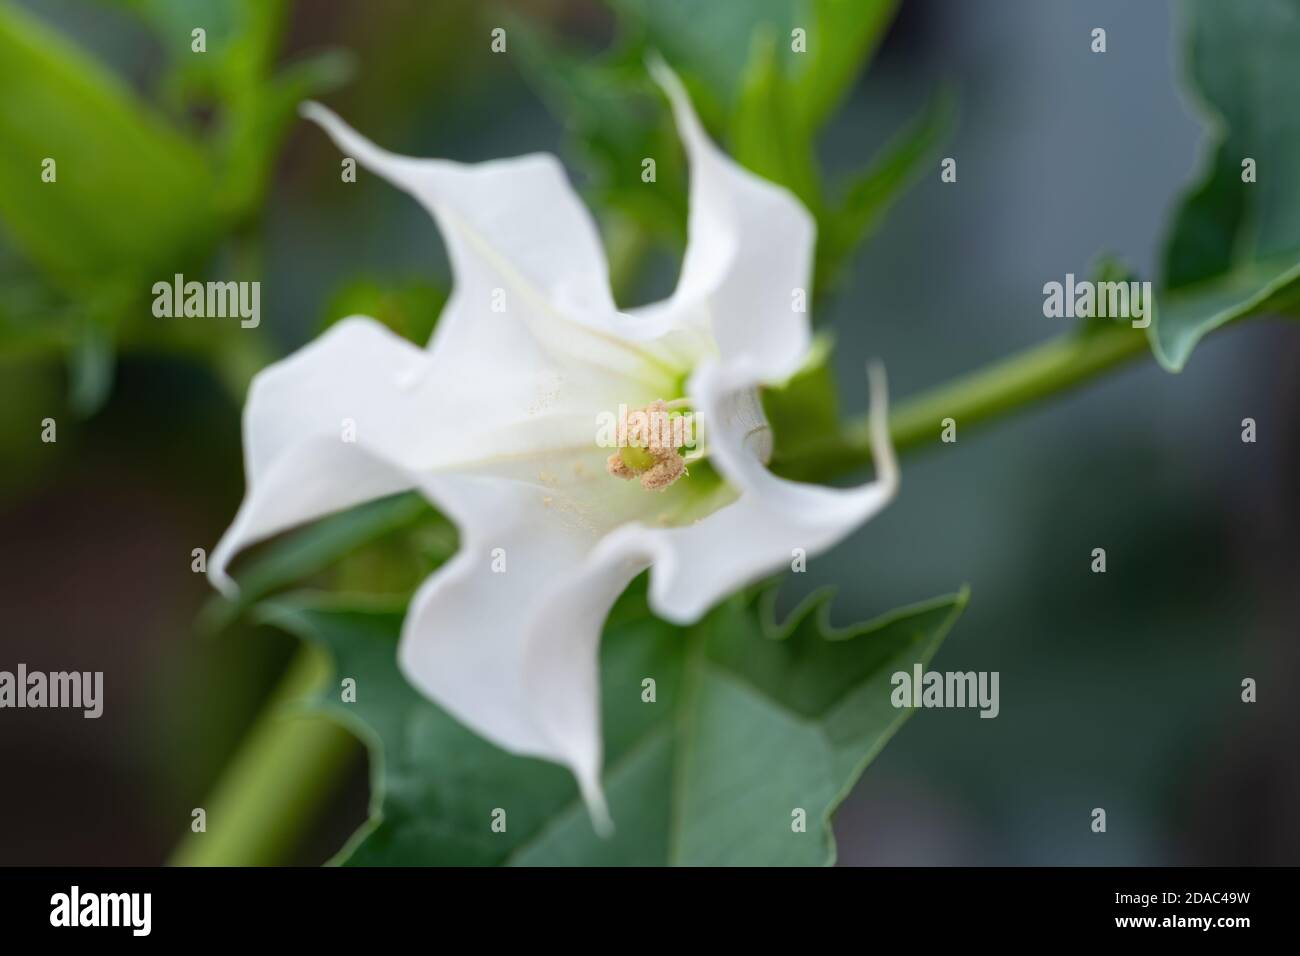 Detail of white trumpet shaped flower of hallucinogen plant Devil's Trumpet (Datura Stramonium), also called Jimsonweed. Shallow depth of field Stock Photo